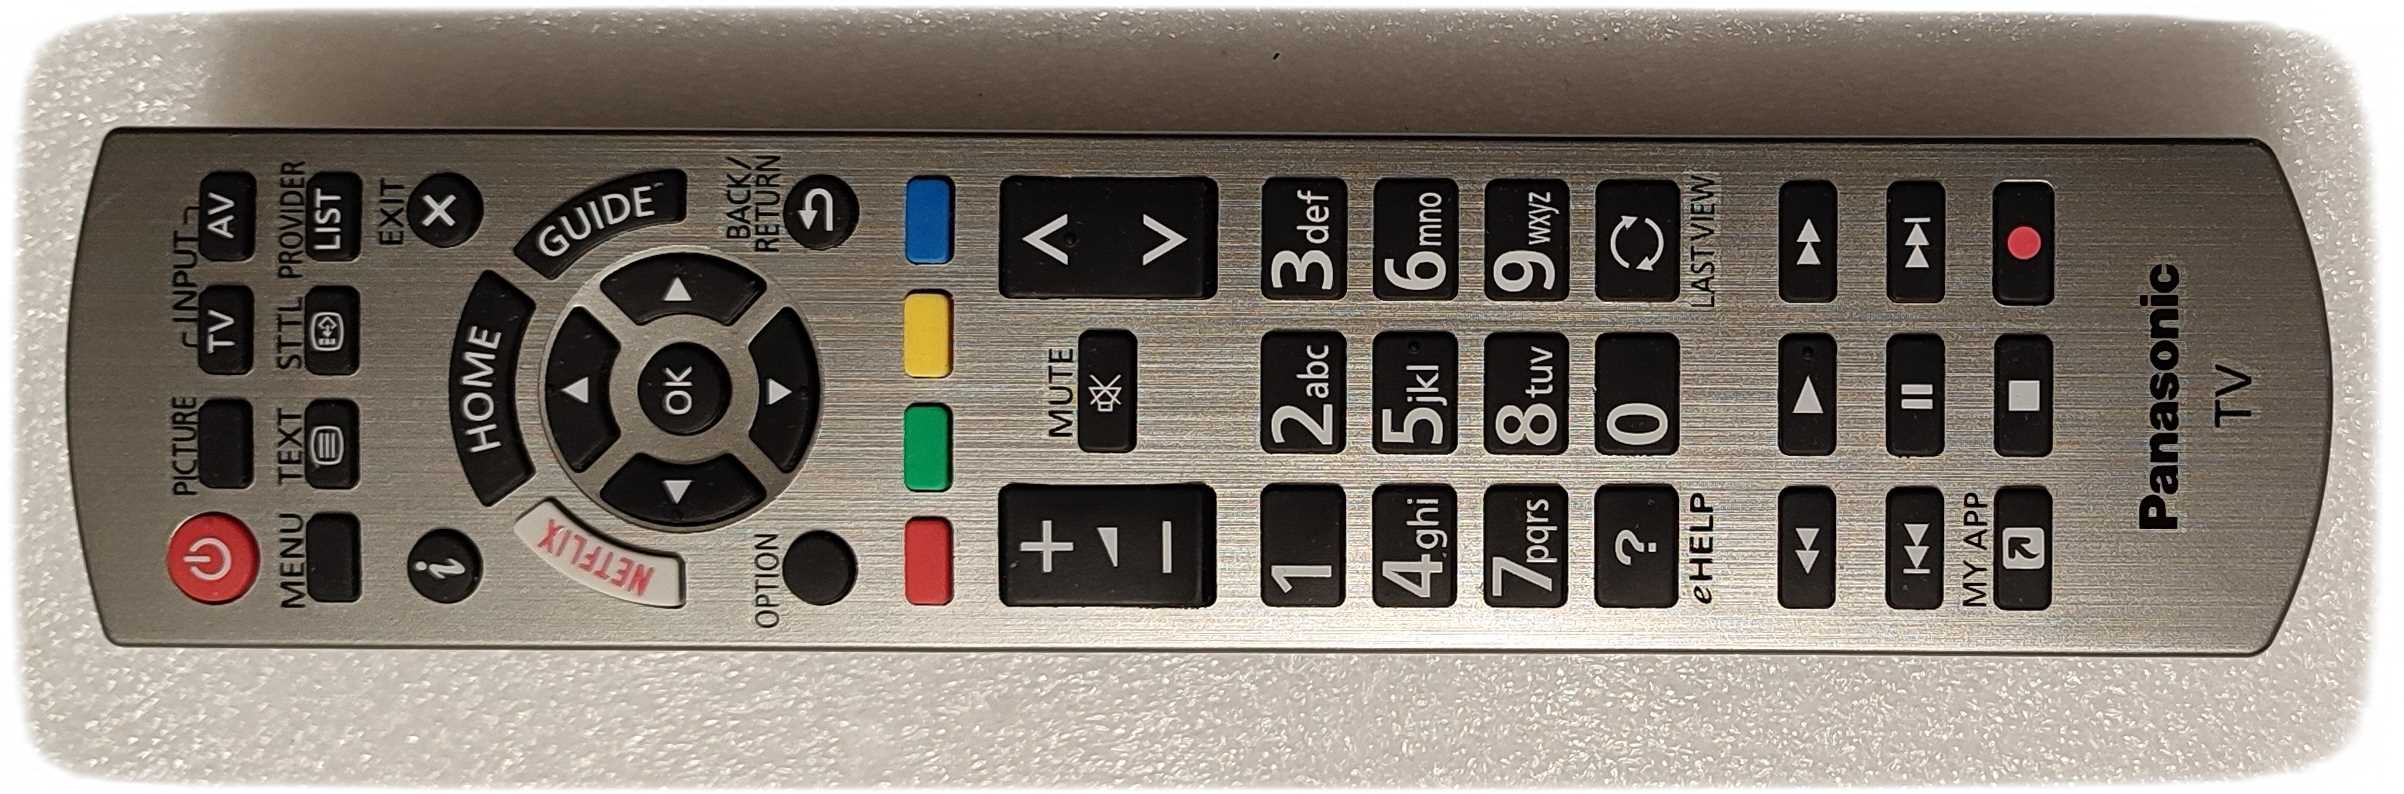 N2QAYB001247 - Telecomando TV Panasonic TX-58HX810E - TV Modules